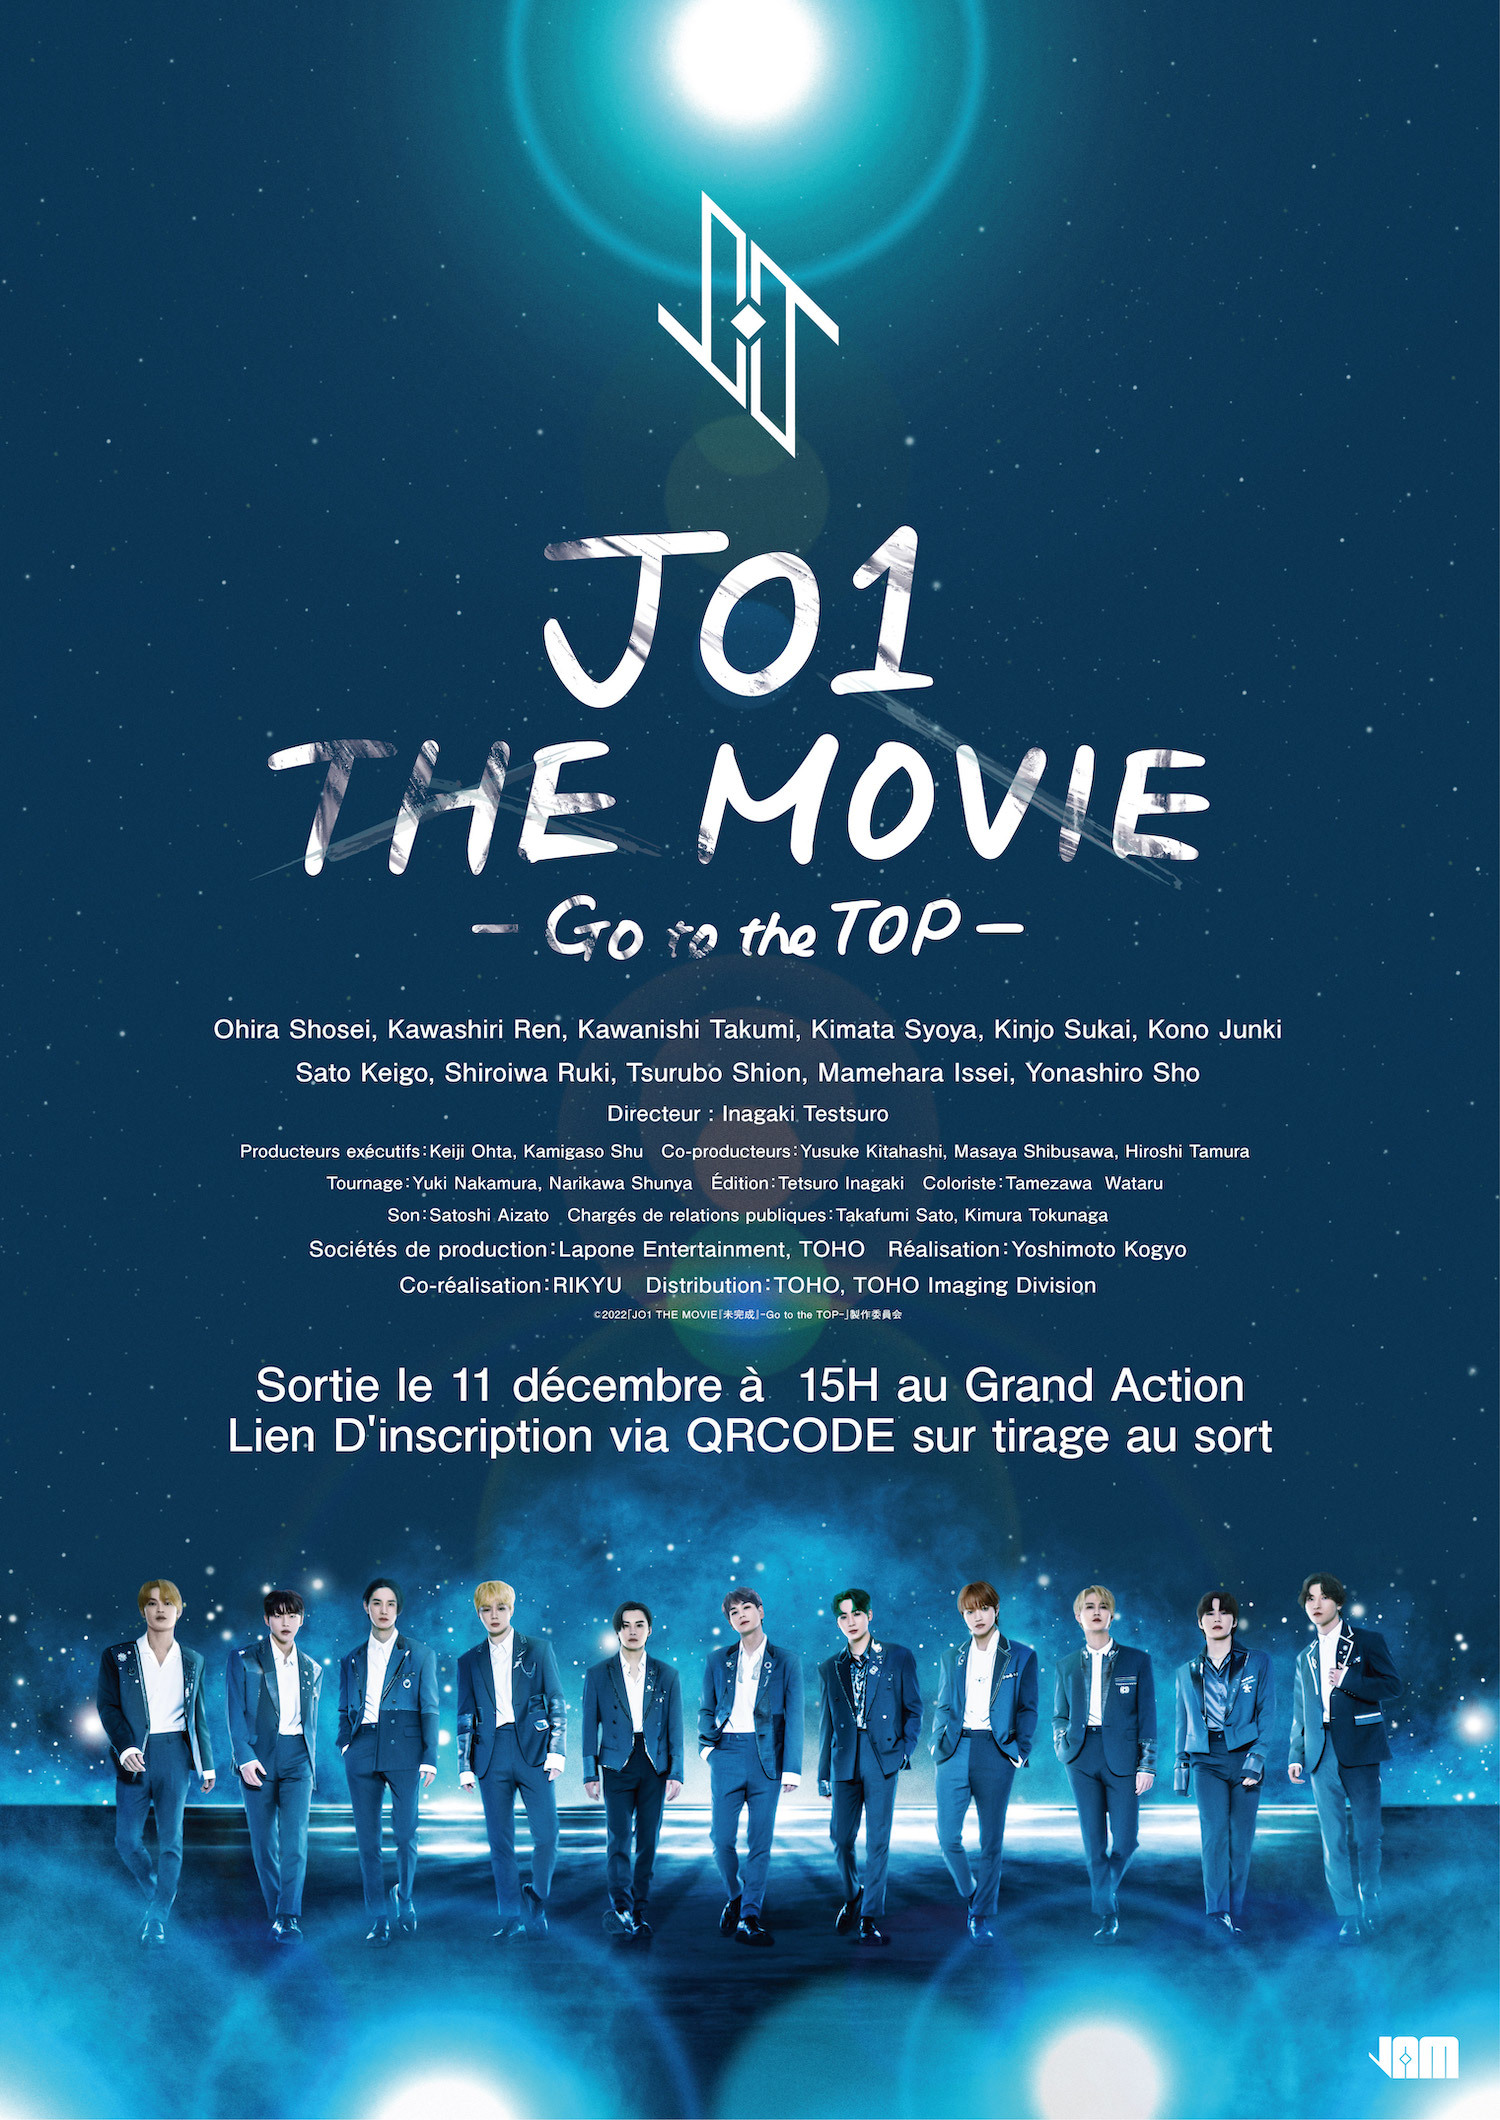 (C)2022「JO1 THE MOVIE『未完成』-Go to the TOP-」製作委員会